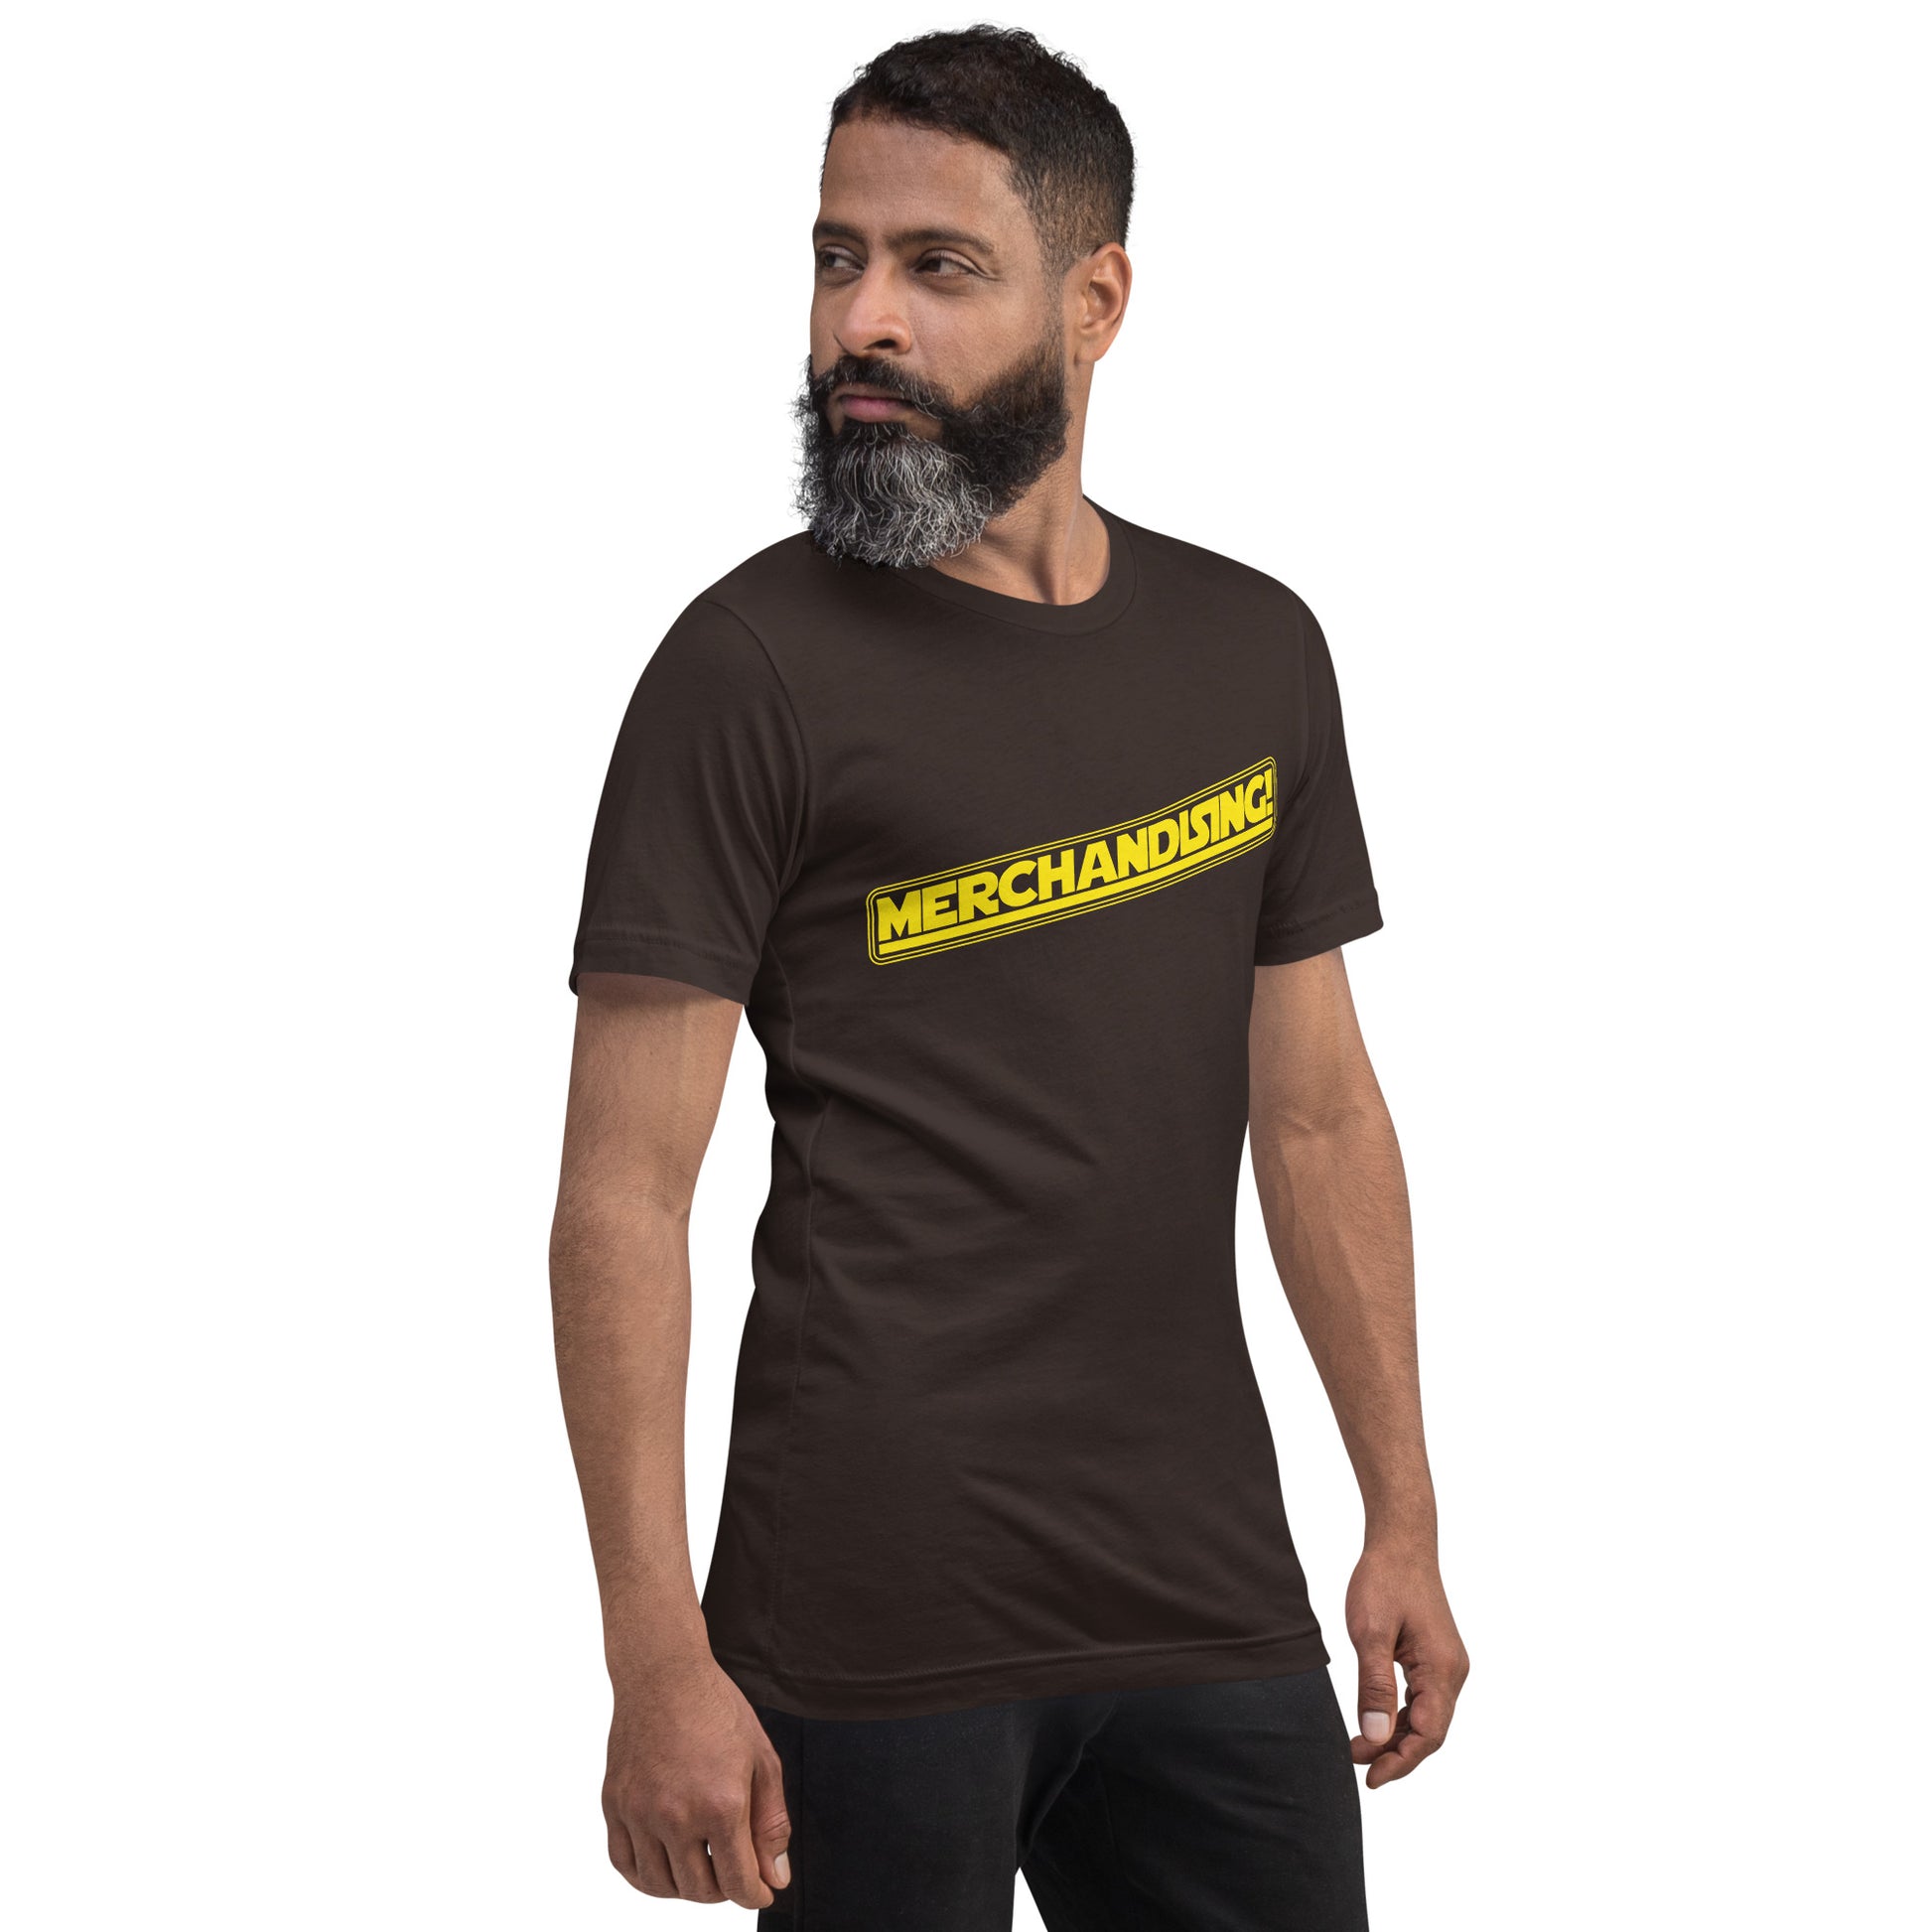 Merchandising Short-sleeve Unisex T-shirt Brown Mockup